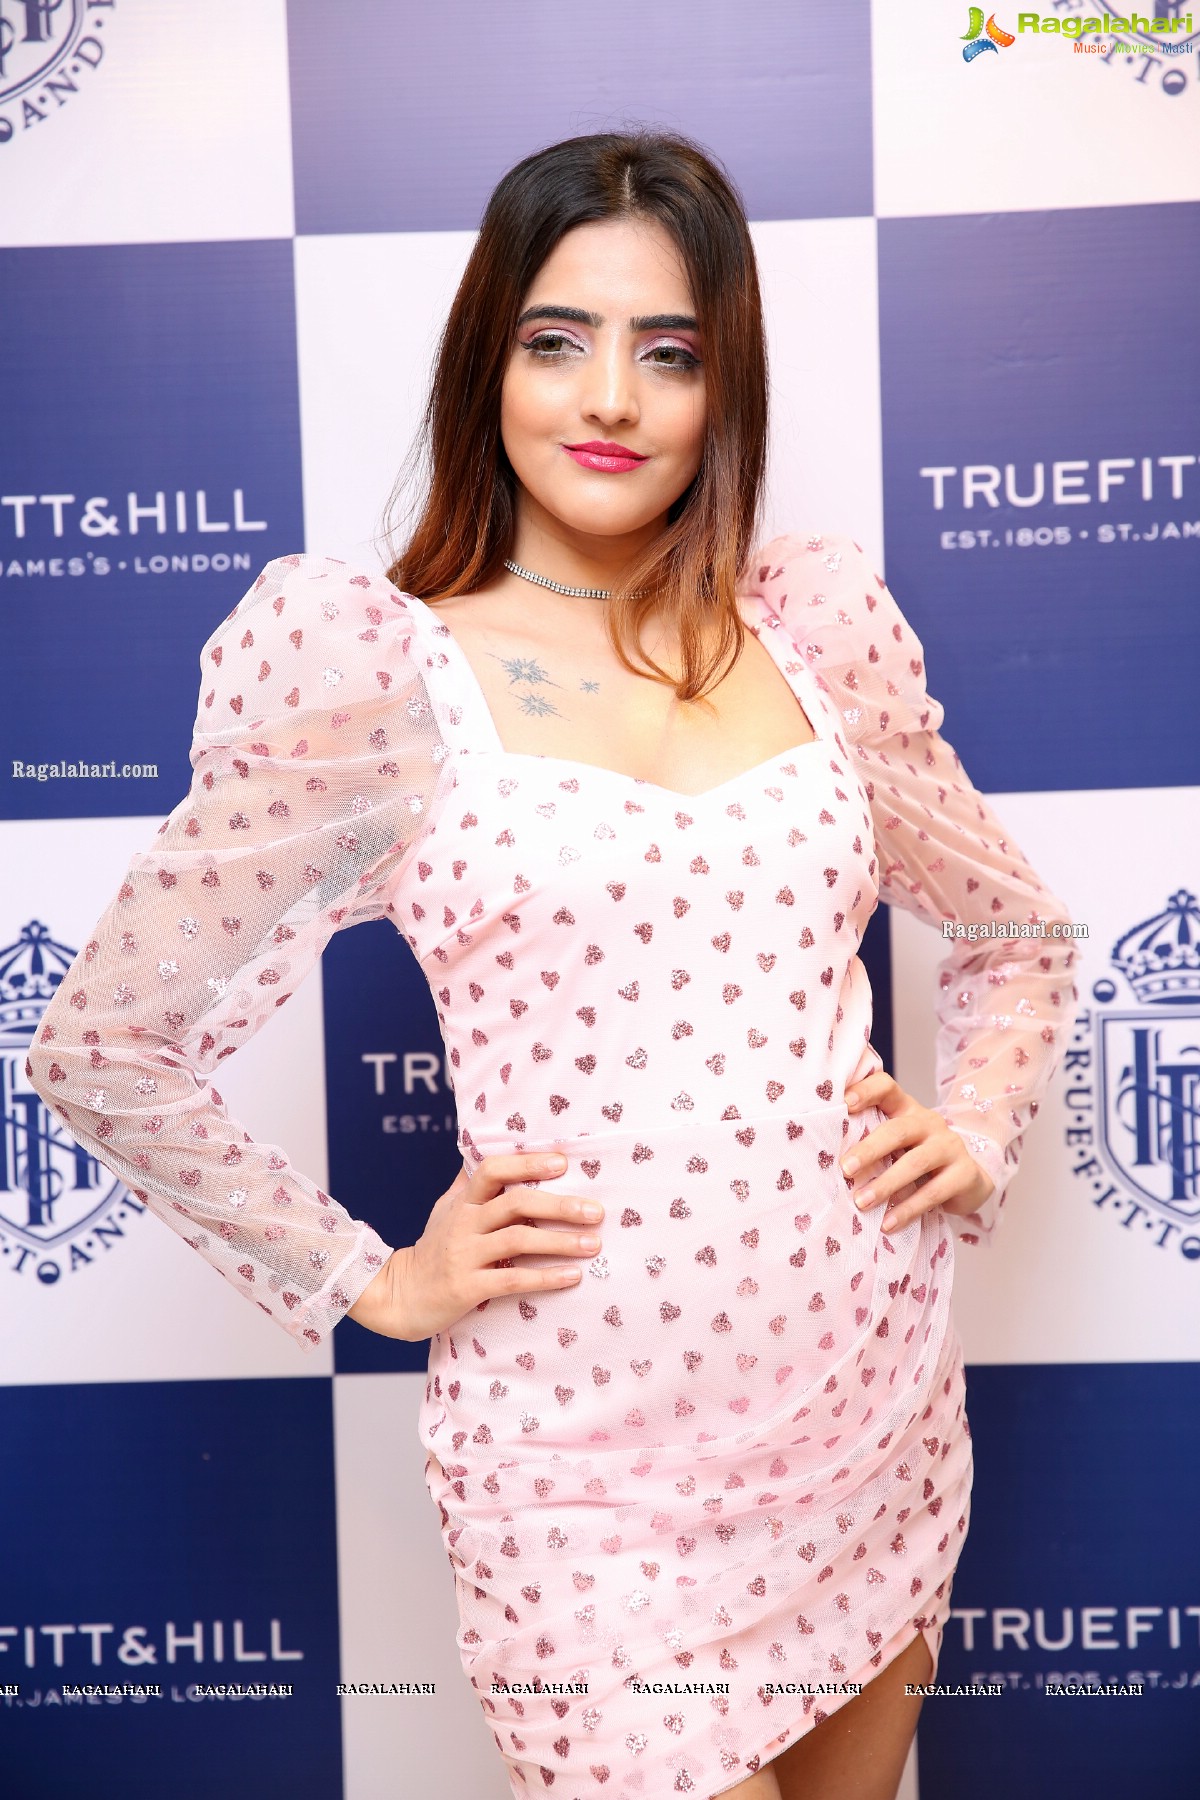 Truefitt & Hill Opens Its 2nd Outlet in Hyderabad at Gachibowli